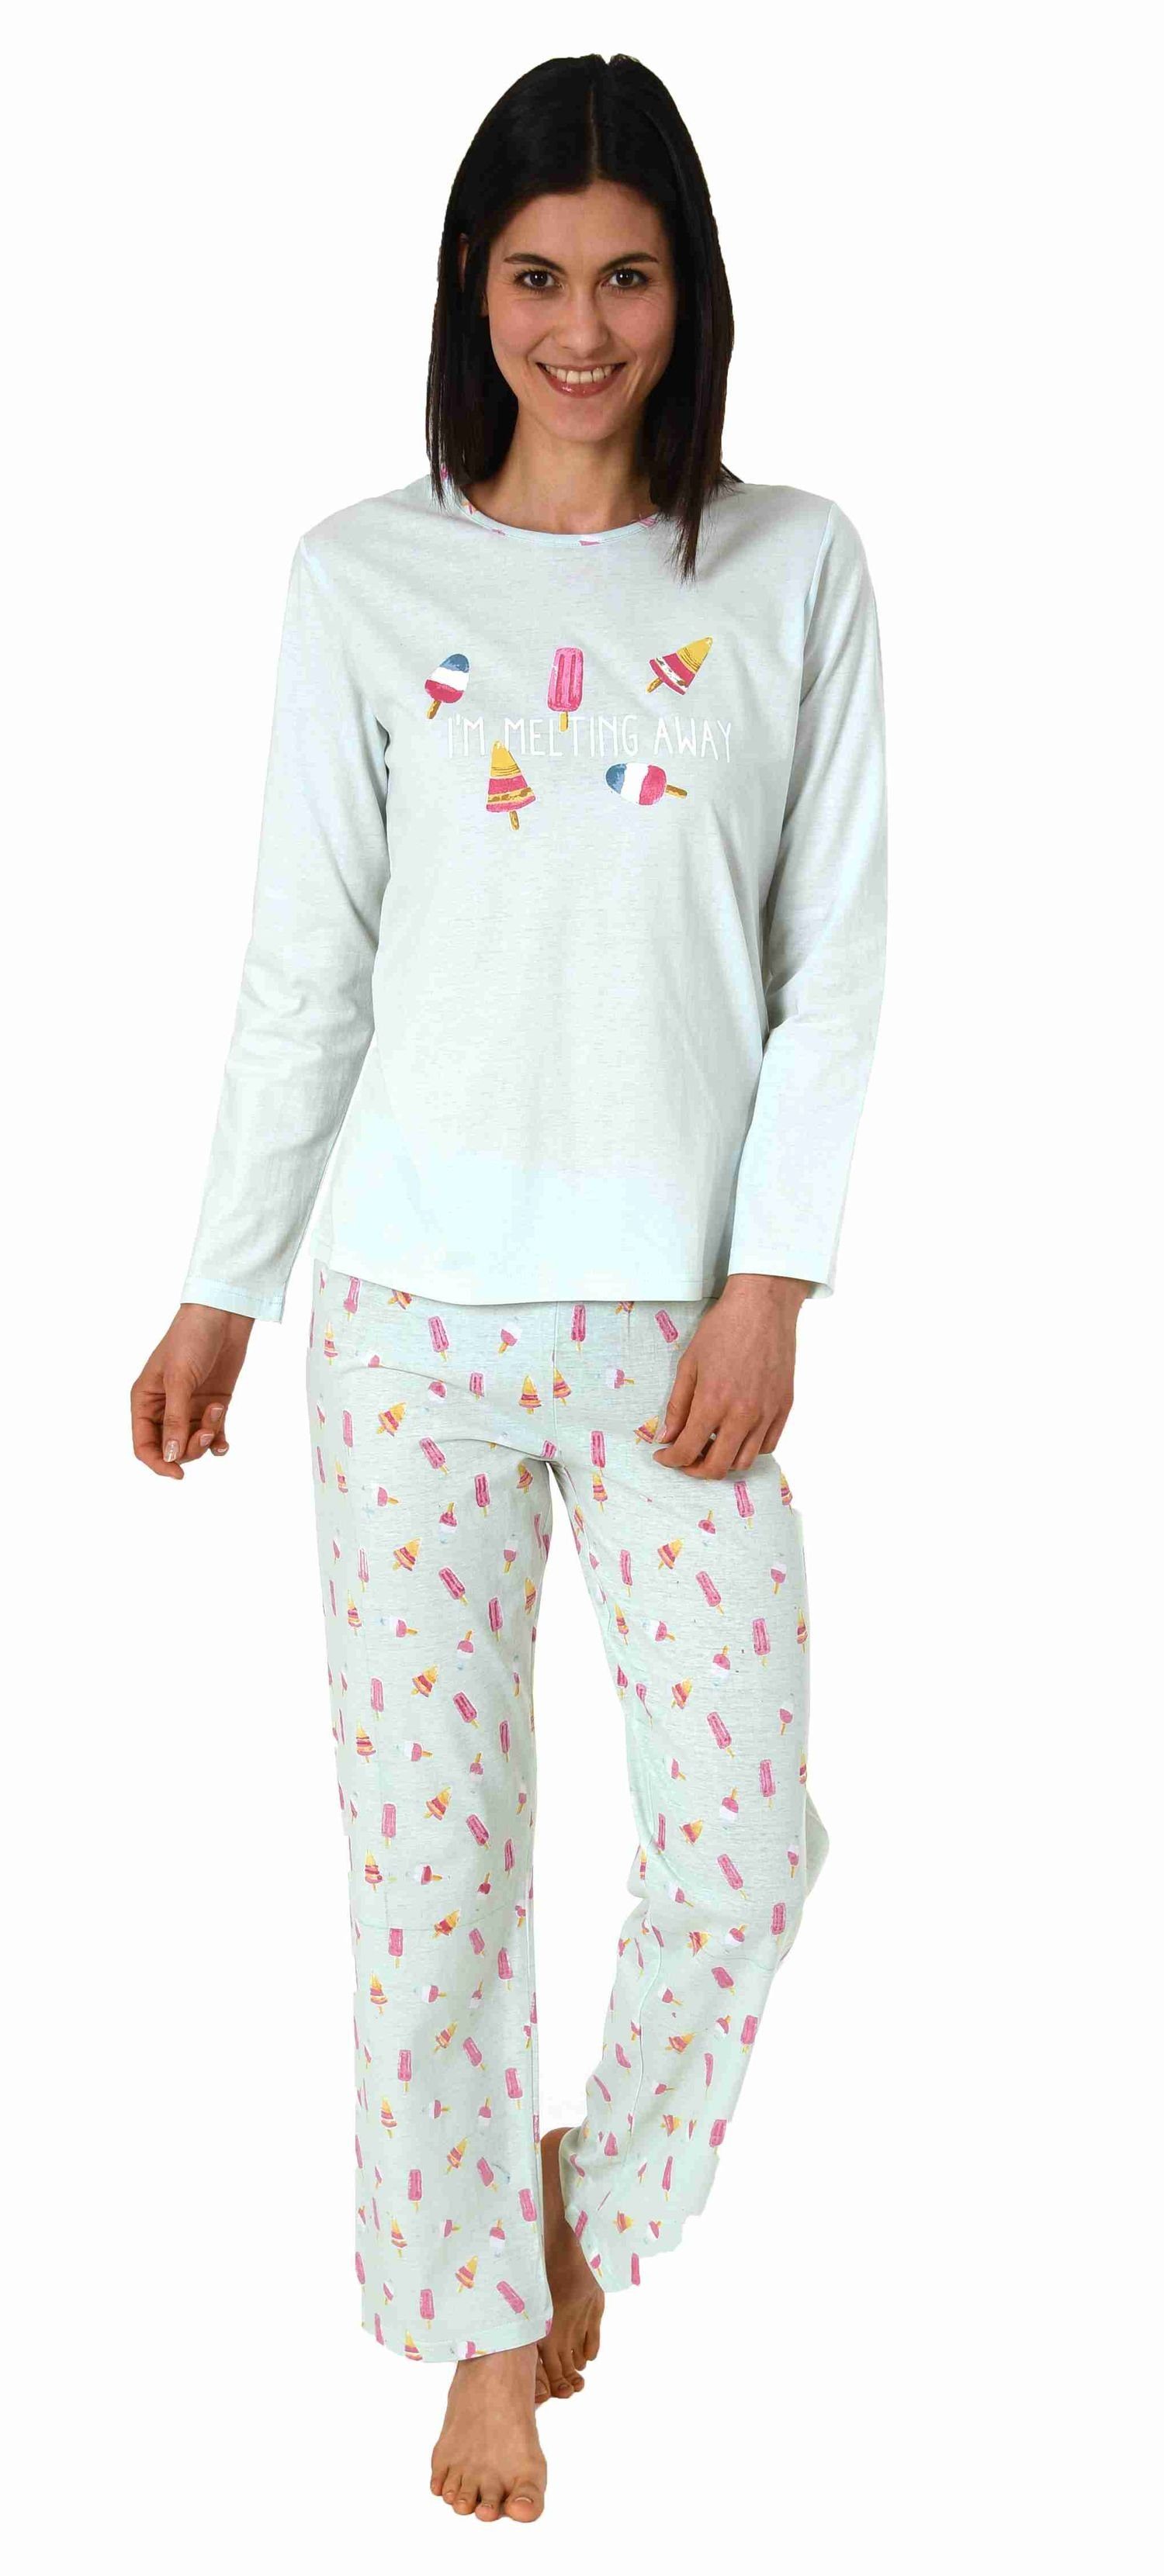 Motiv, Damen süssen Pyjamahose Normann bedruckt Pyjama allover Schlafanzug mit lang